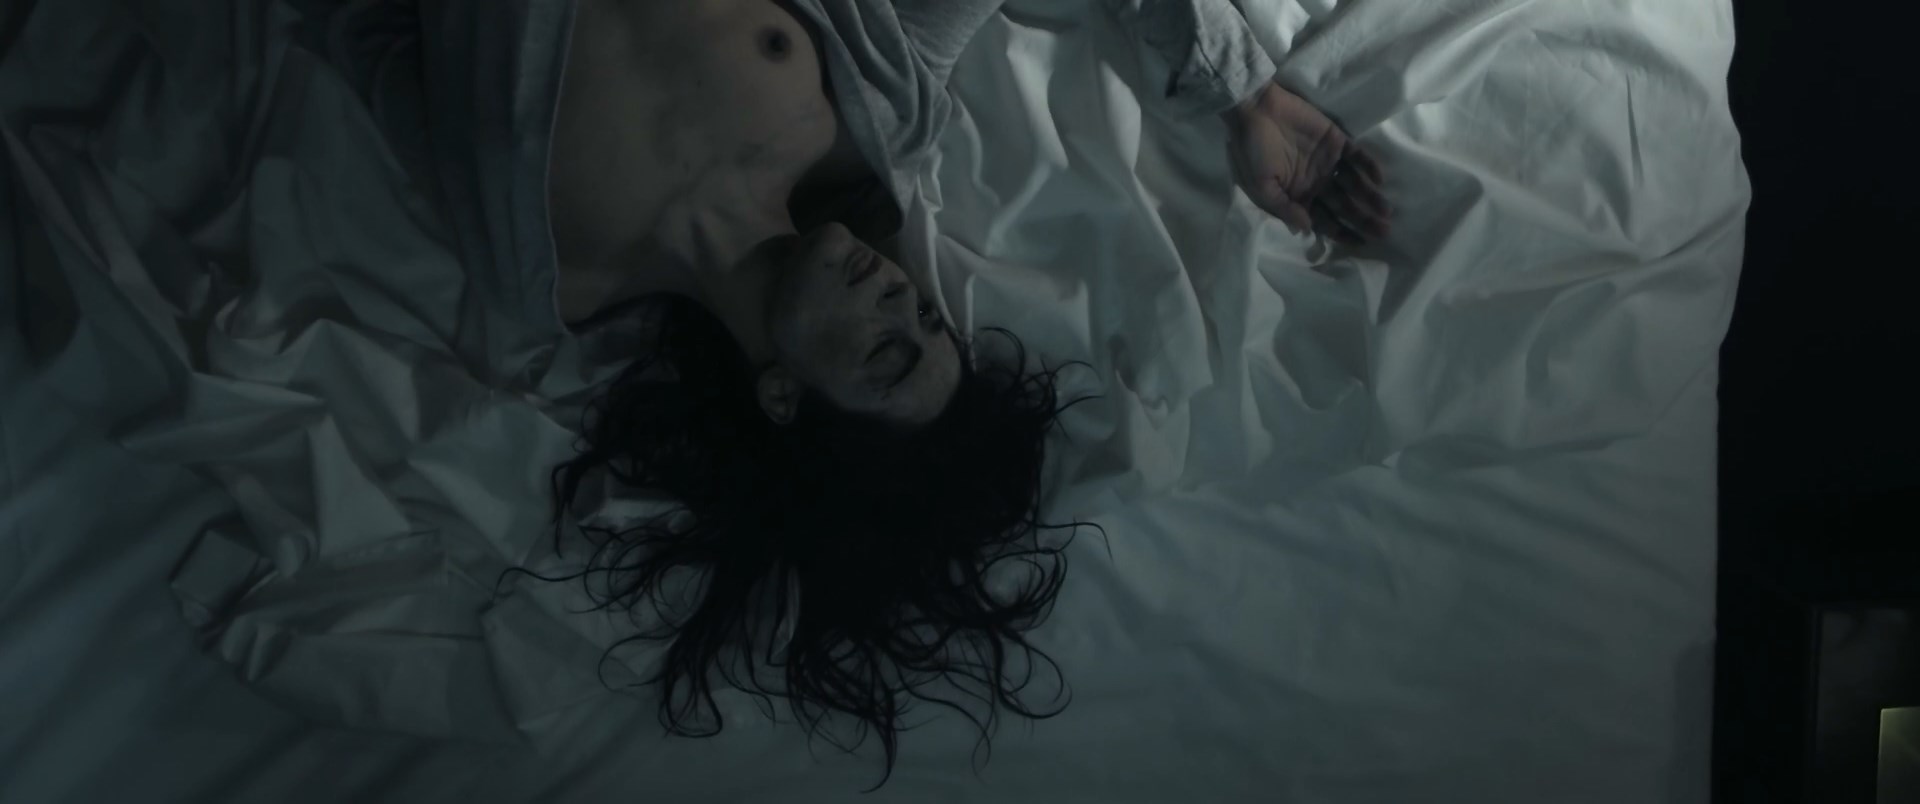 Beatriz Nieto nude - The devil on your back (2015) .